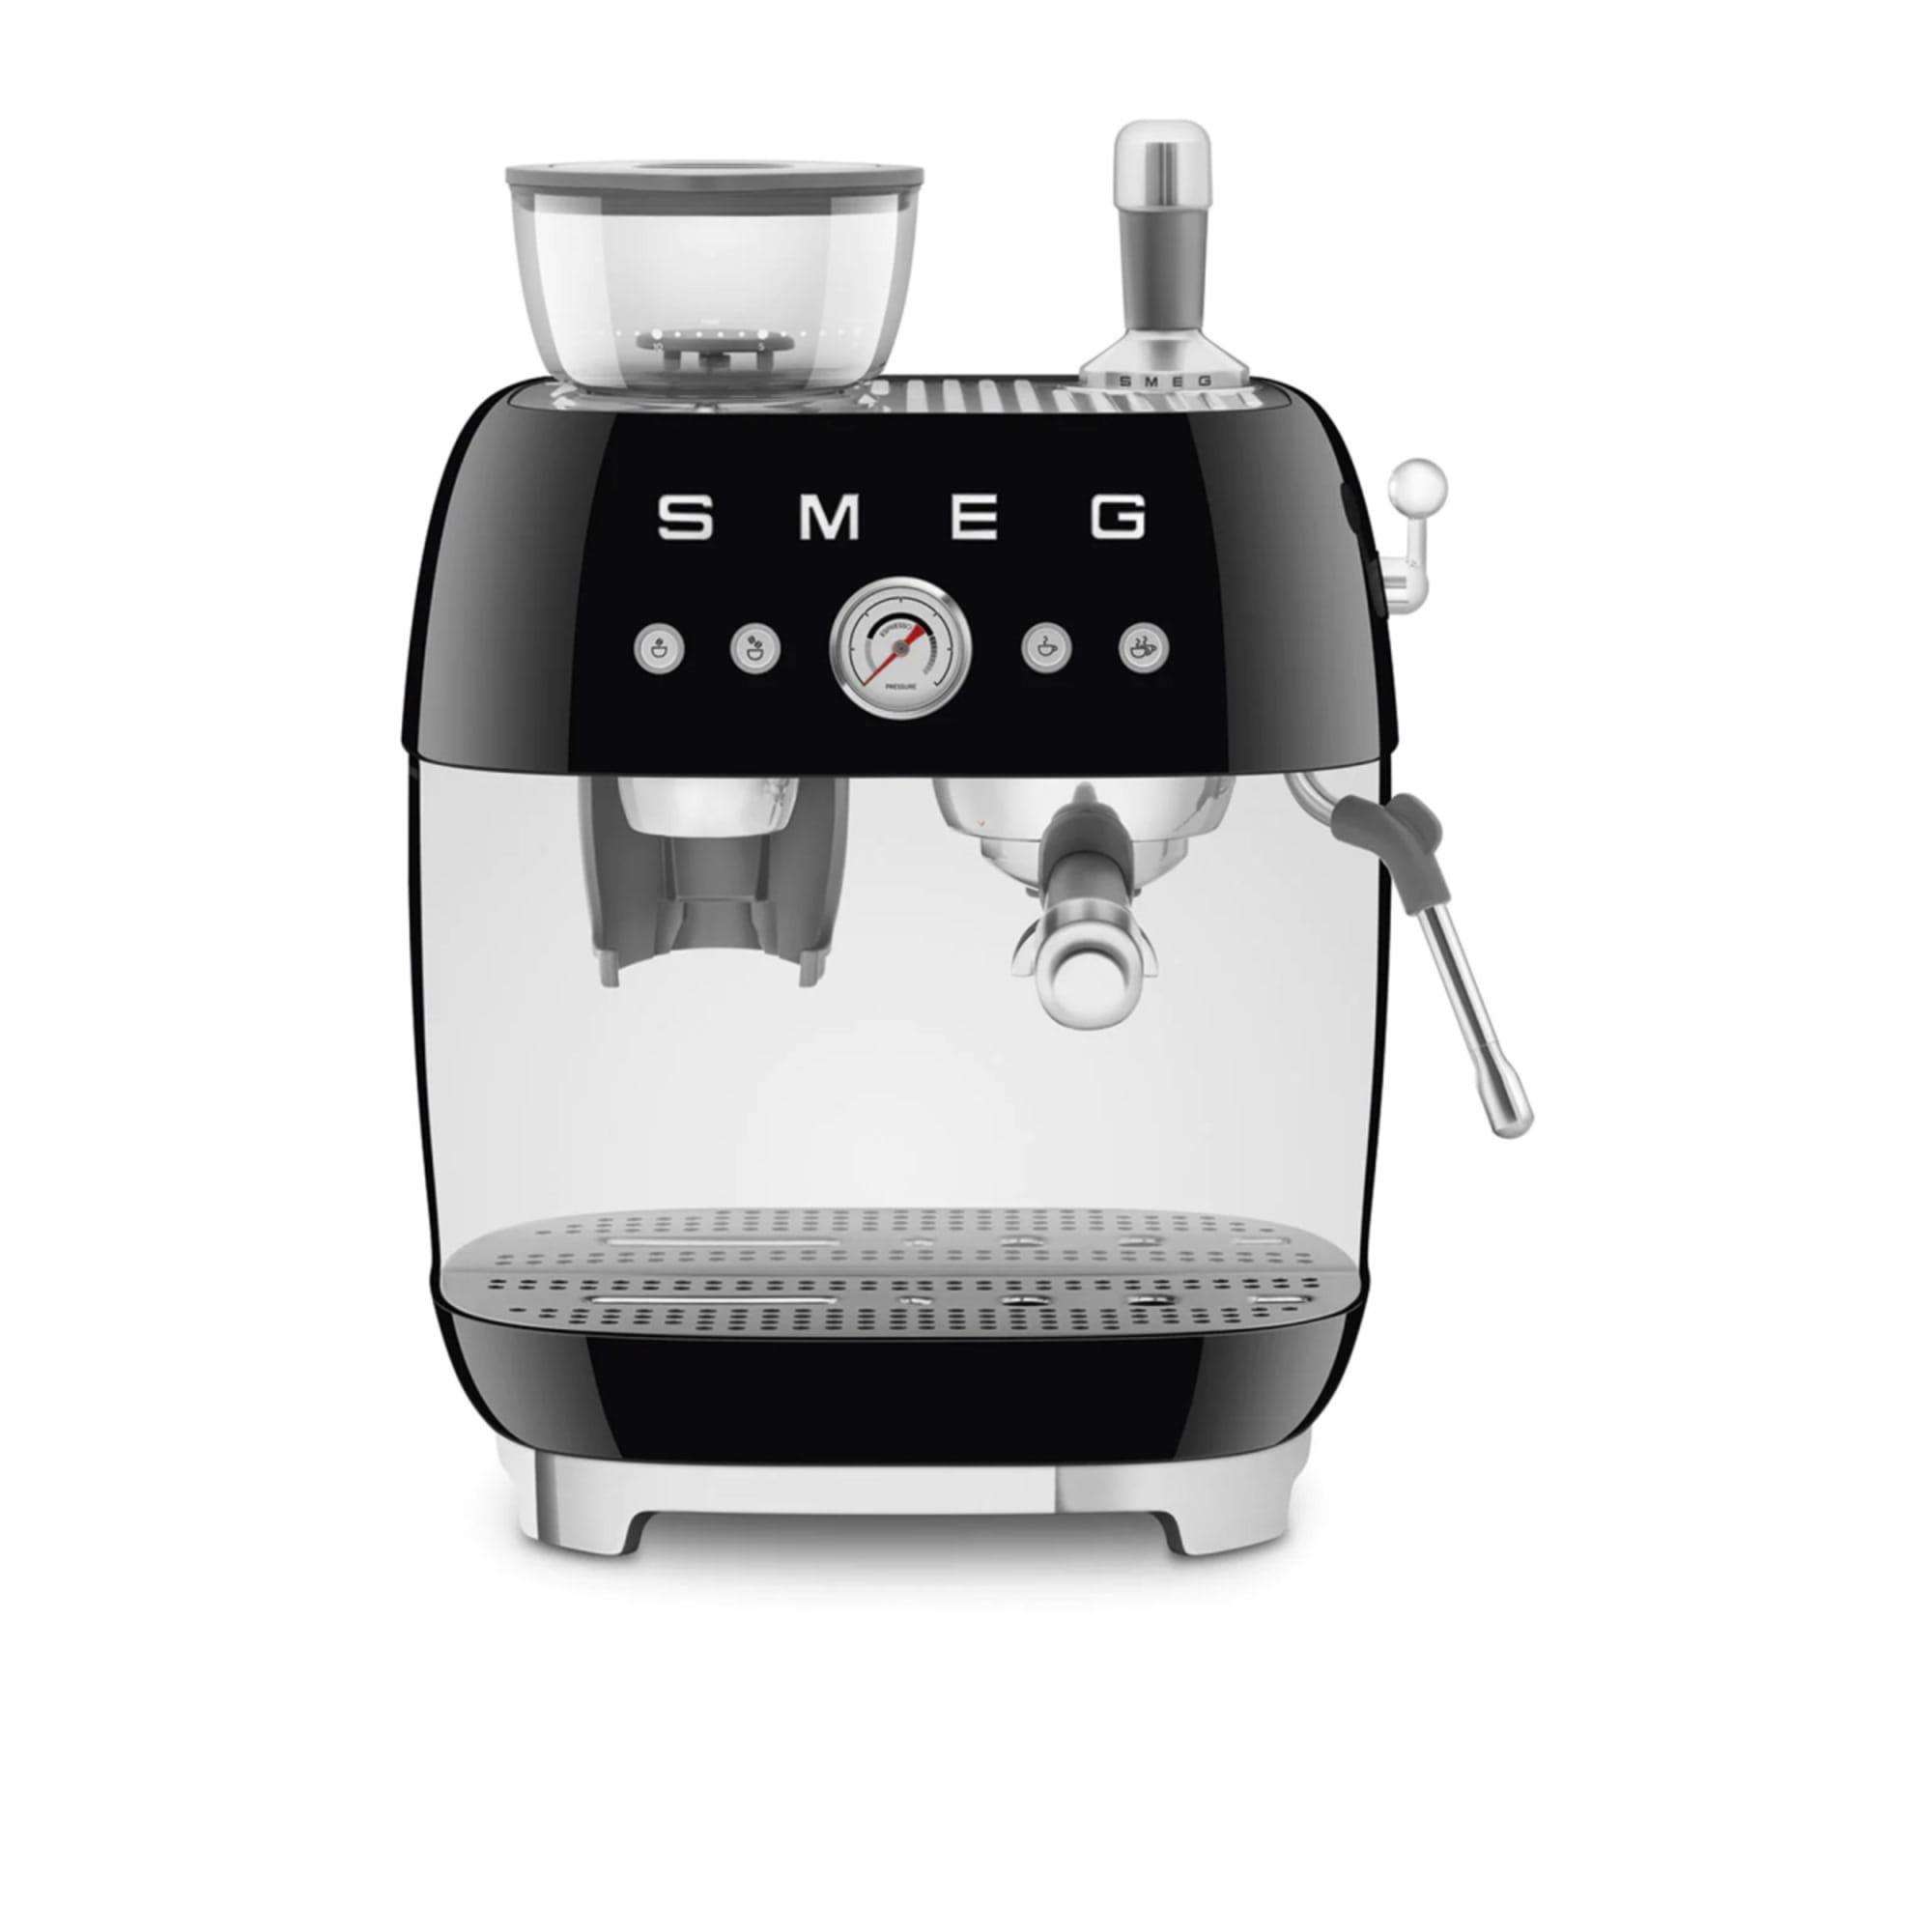 Smeg 50's Retro Style Espresso Machine with Built In Grinder Black Image 9